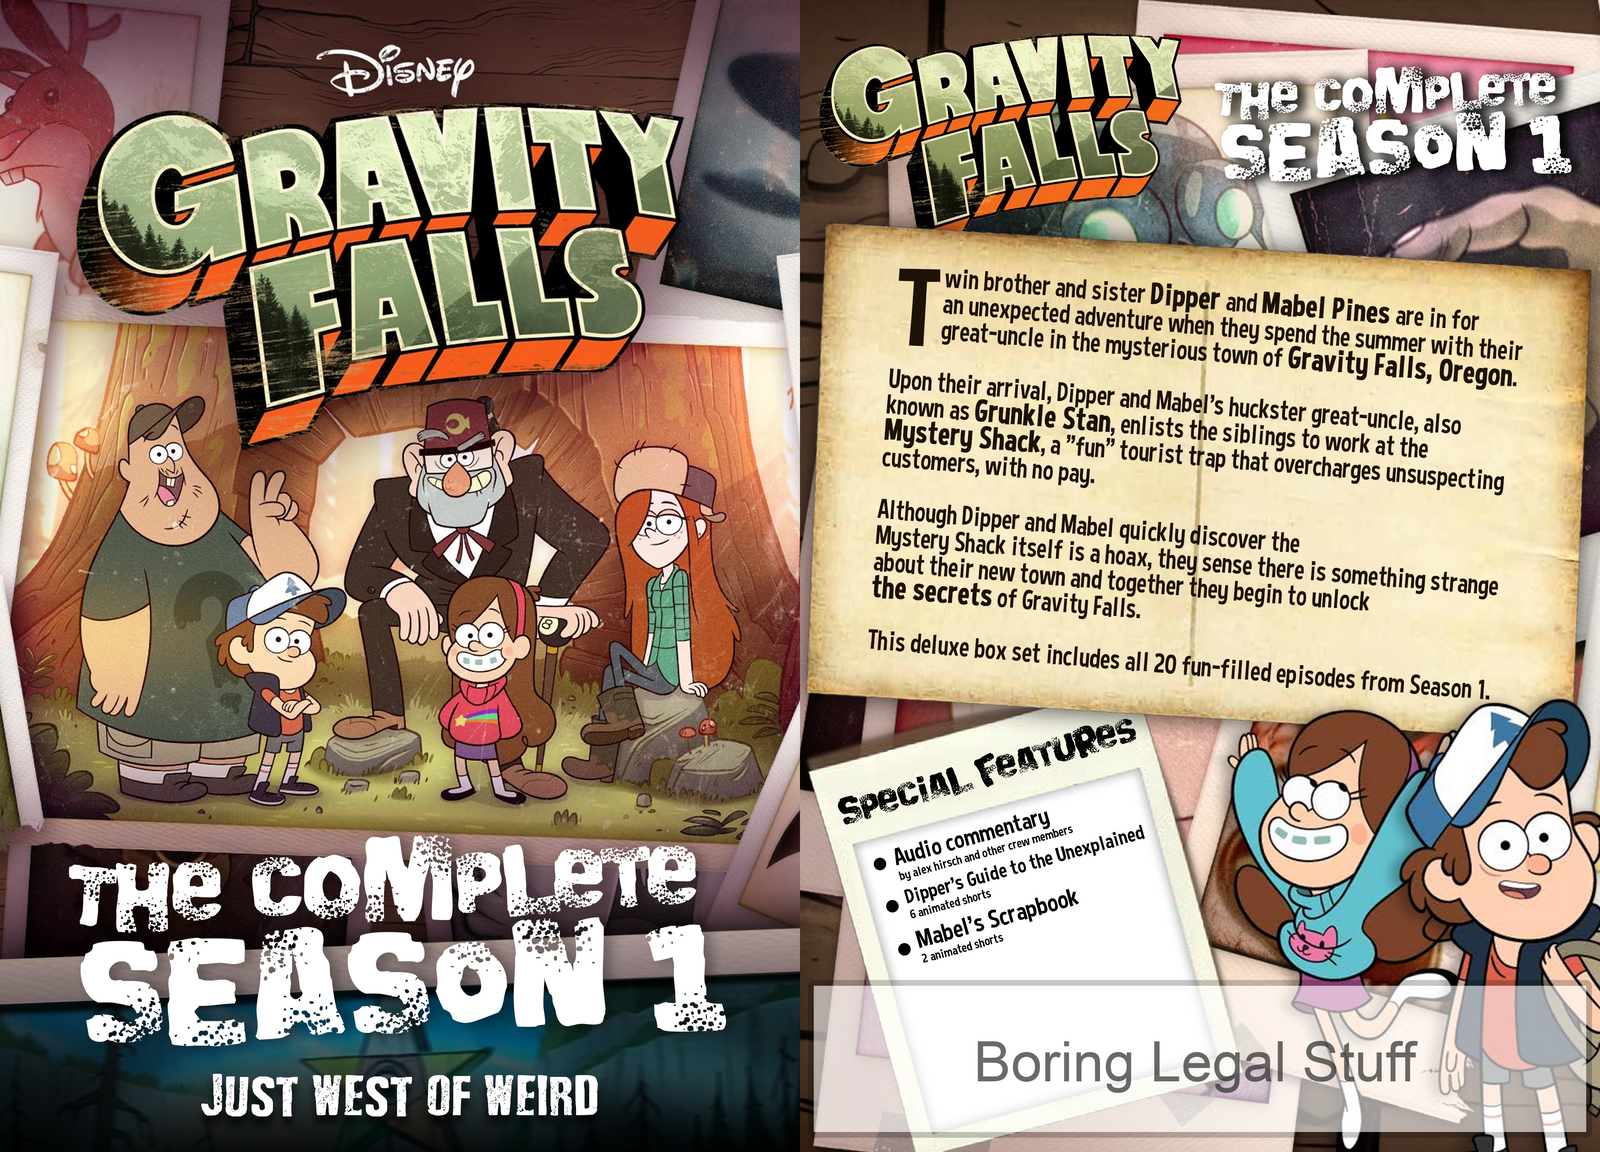 Unofficial Gravity Falls Season 1 Cover Art Mockup